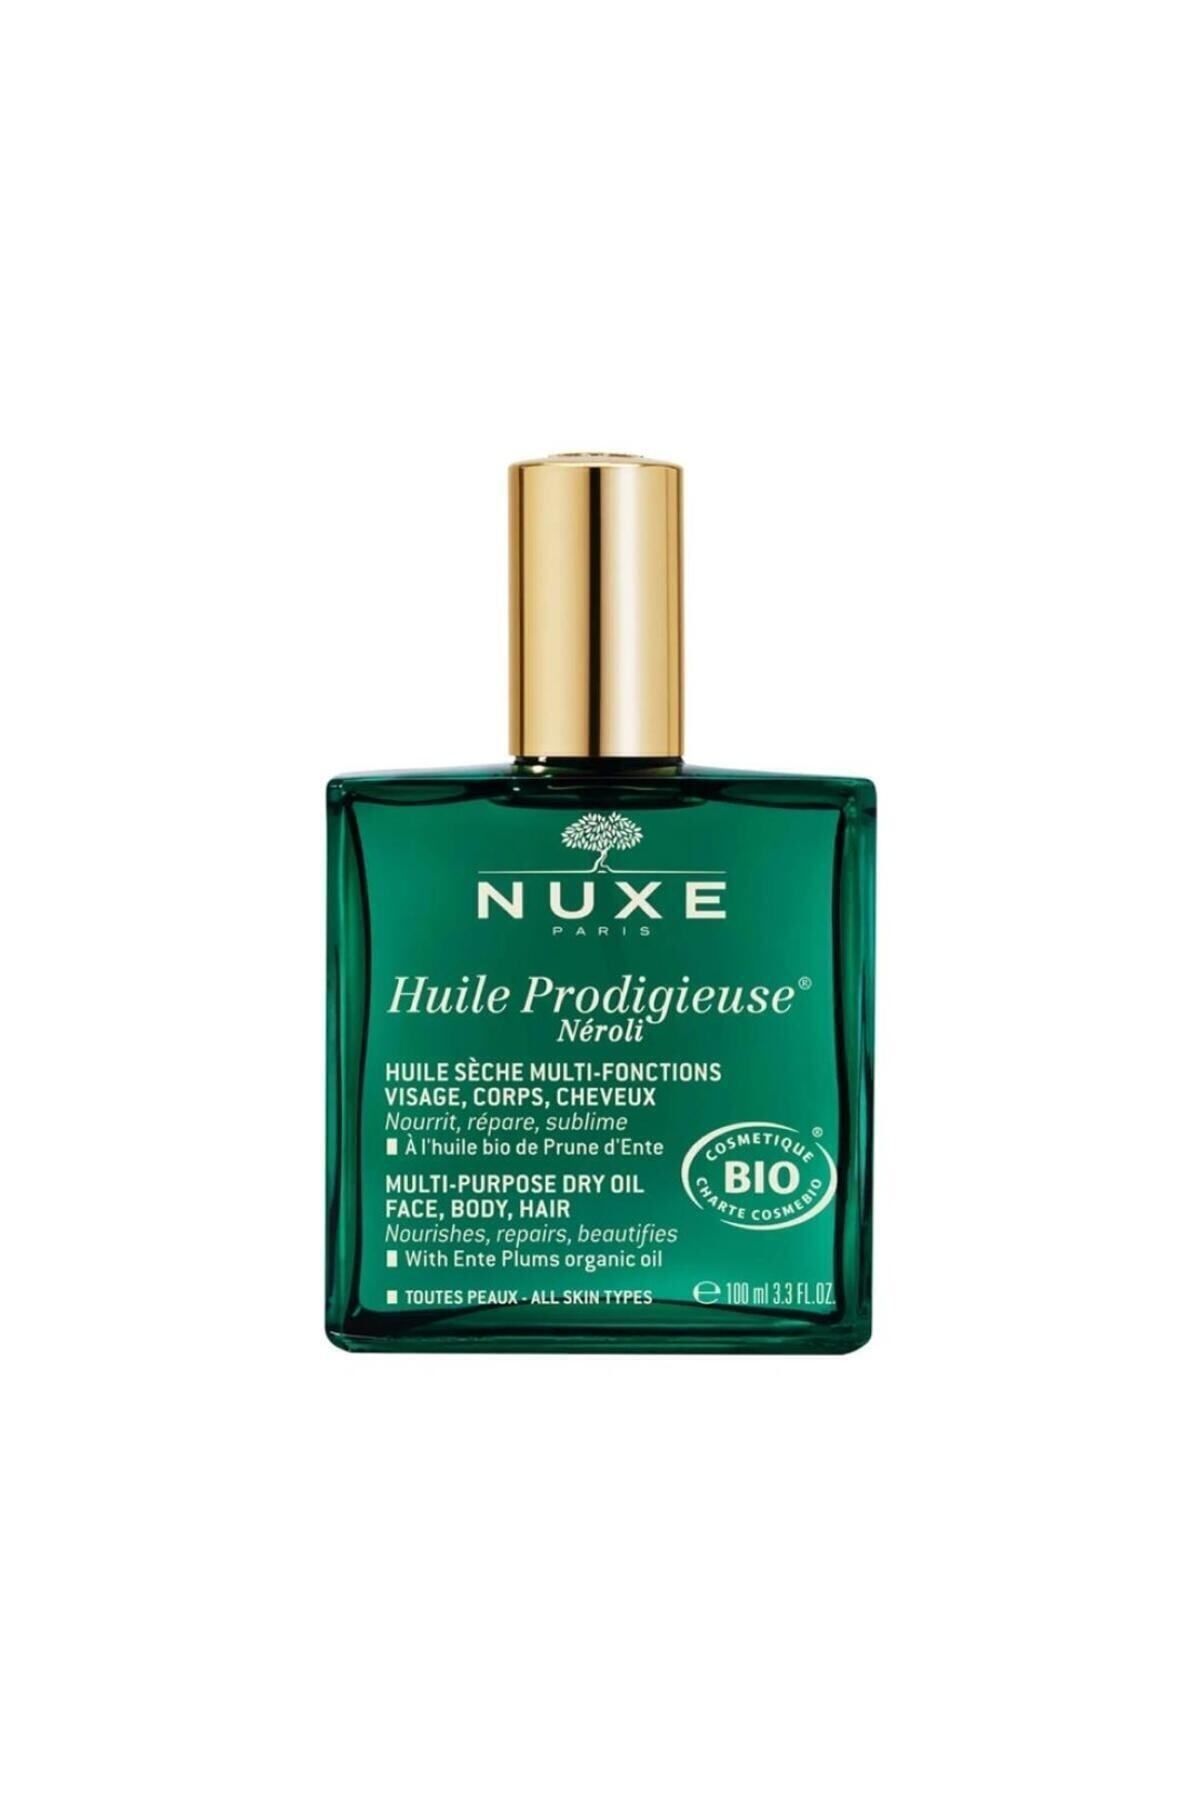 Nuxe روغن مرطوب کننده آلی خشک برای صورت، بدن و مو 100 میلی لیتر